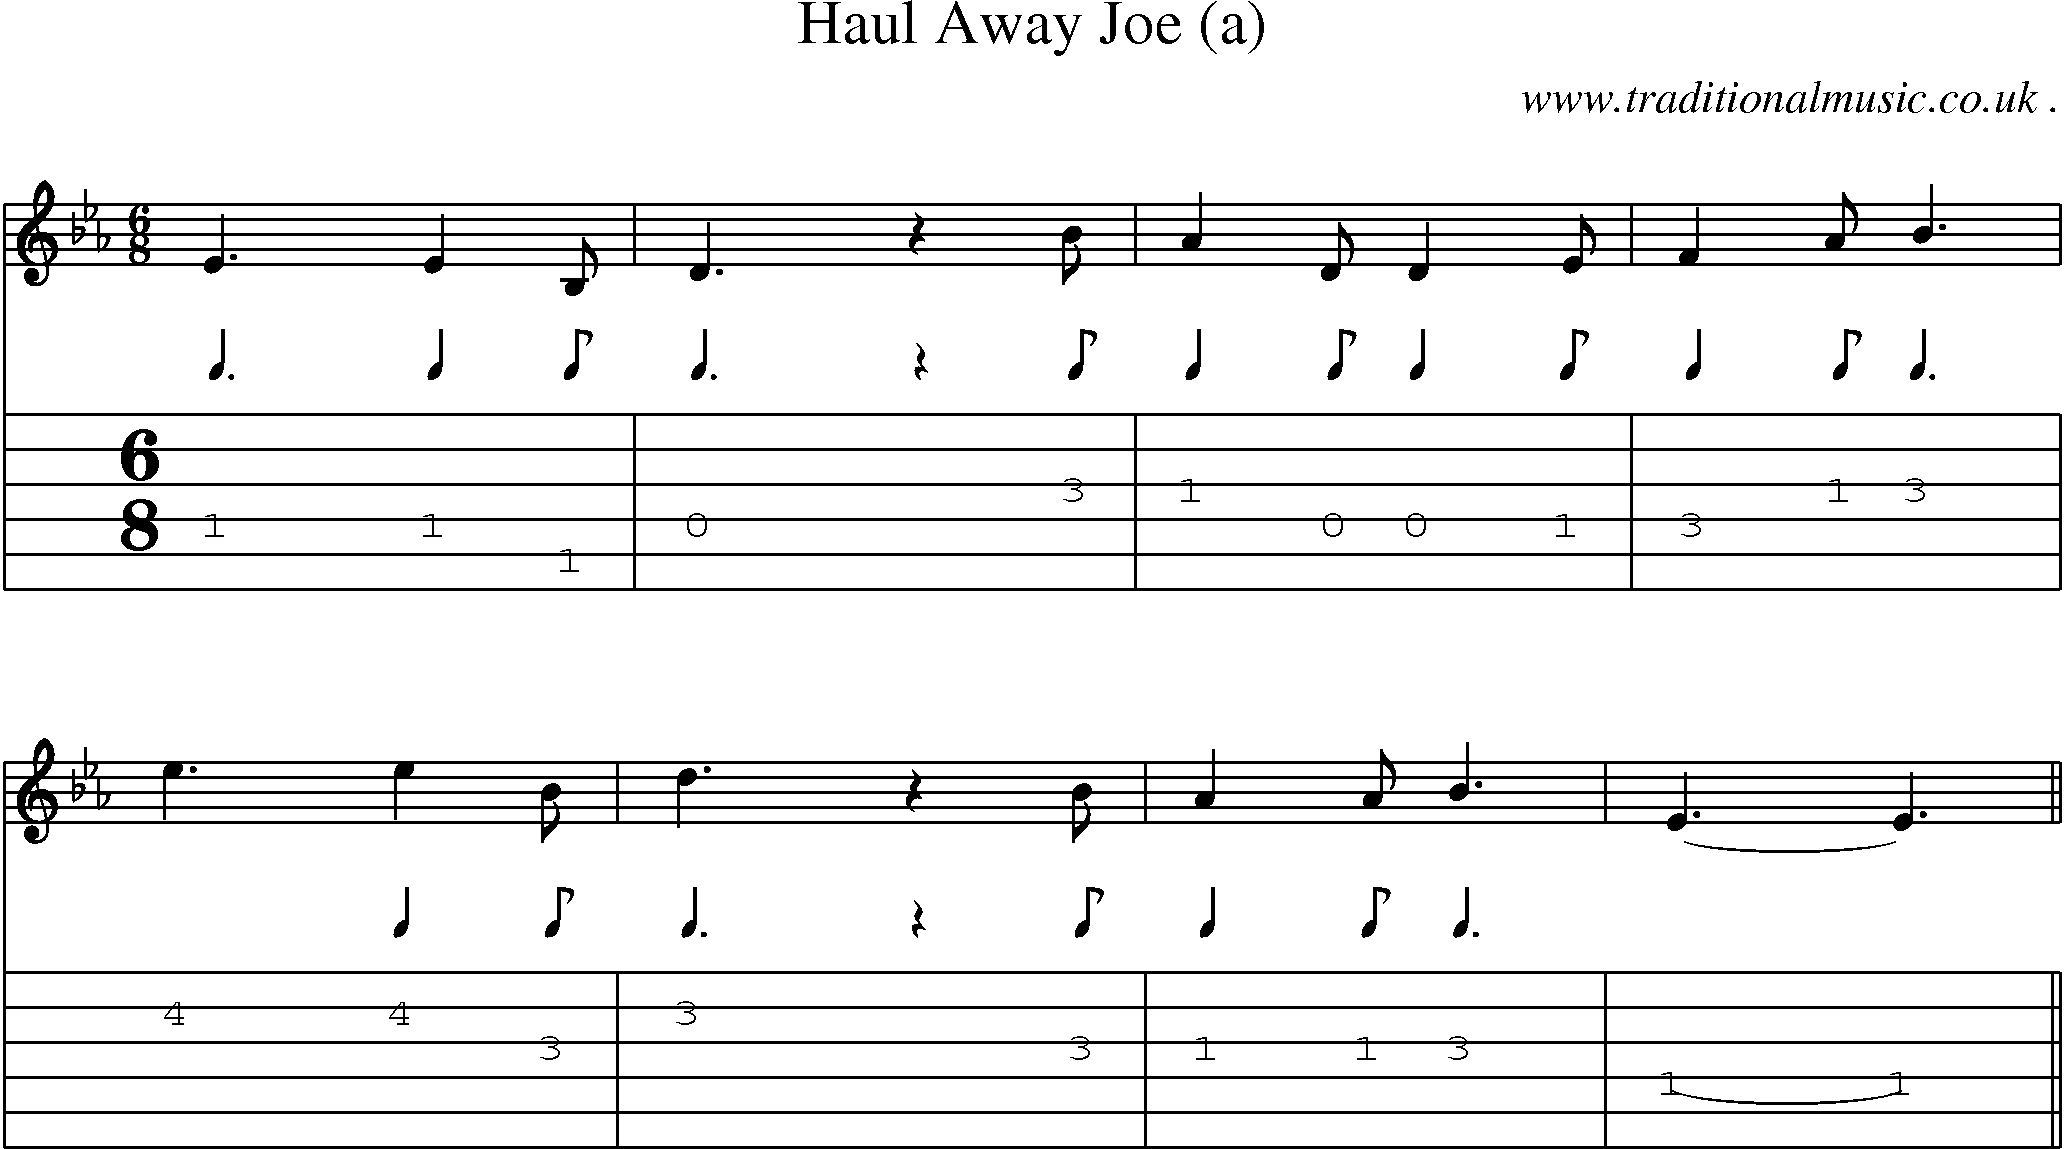 Sheet-Music and Guitar Tabs for Haul Away Joe (a)